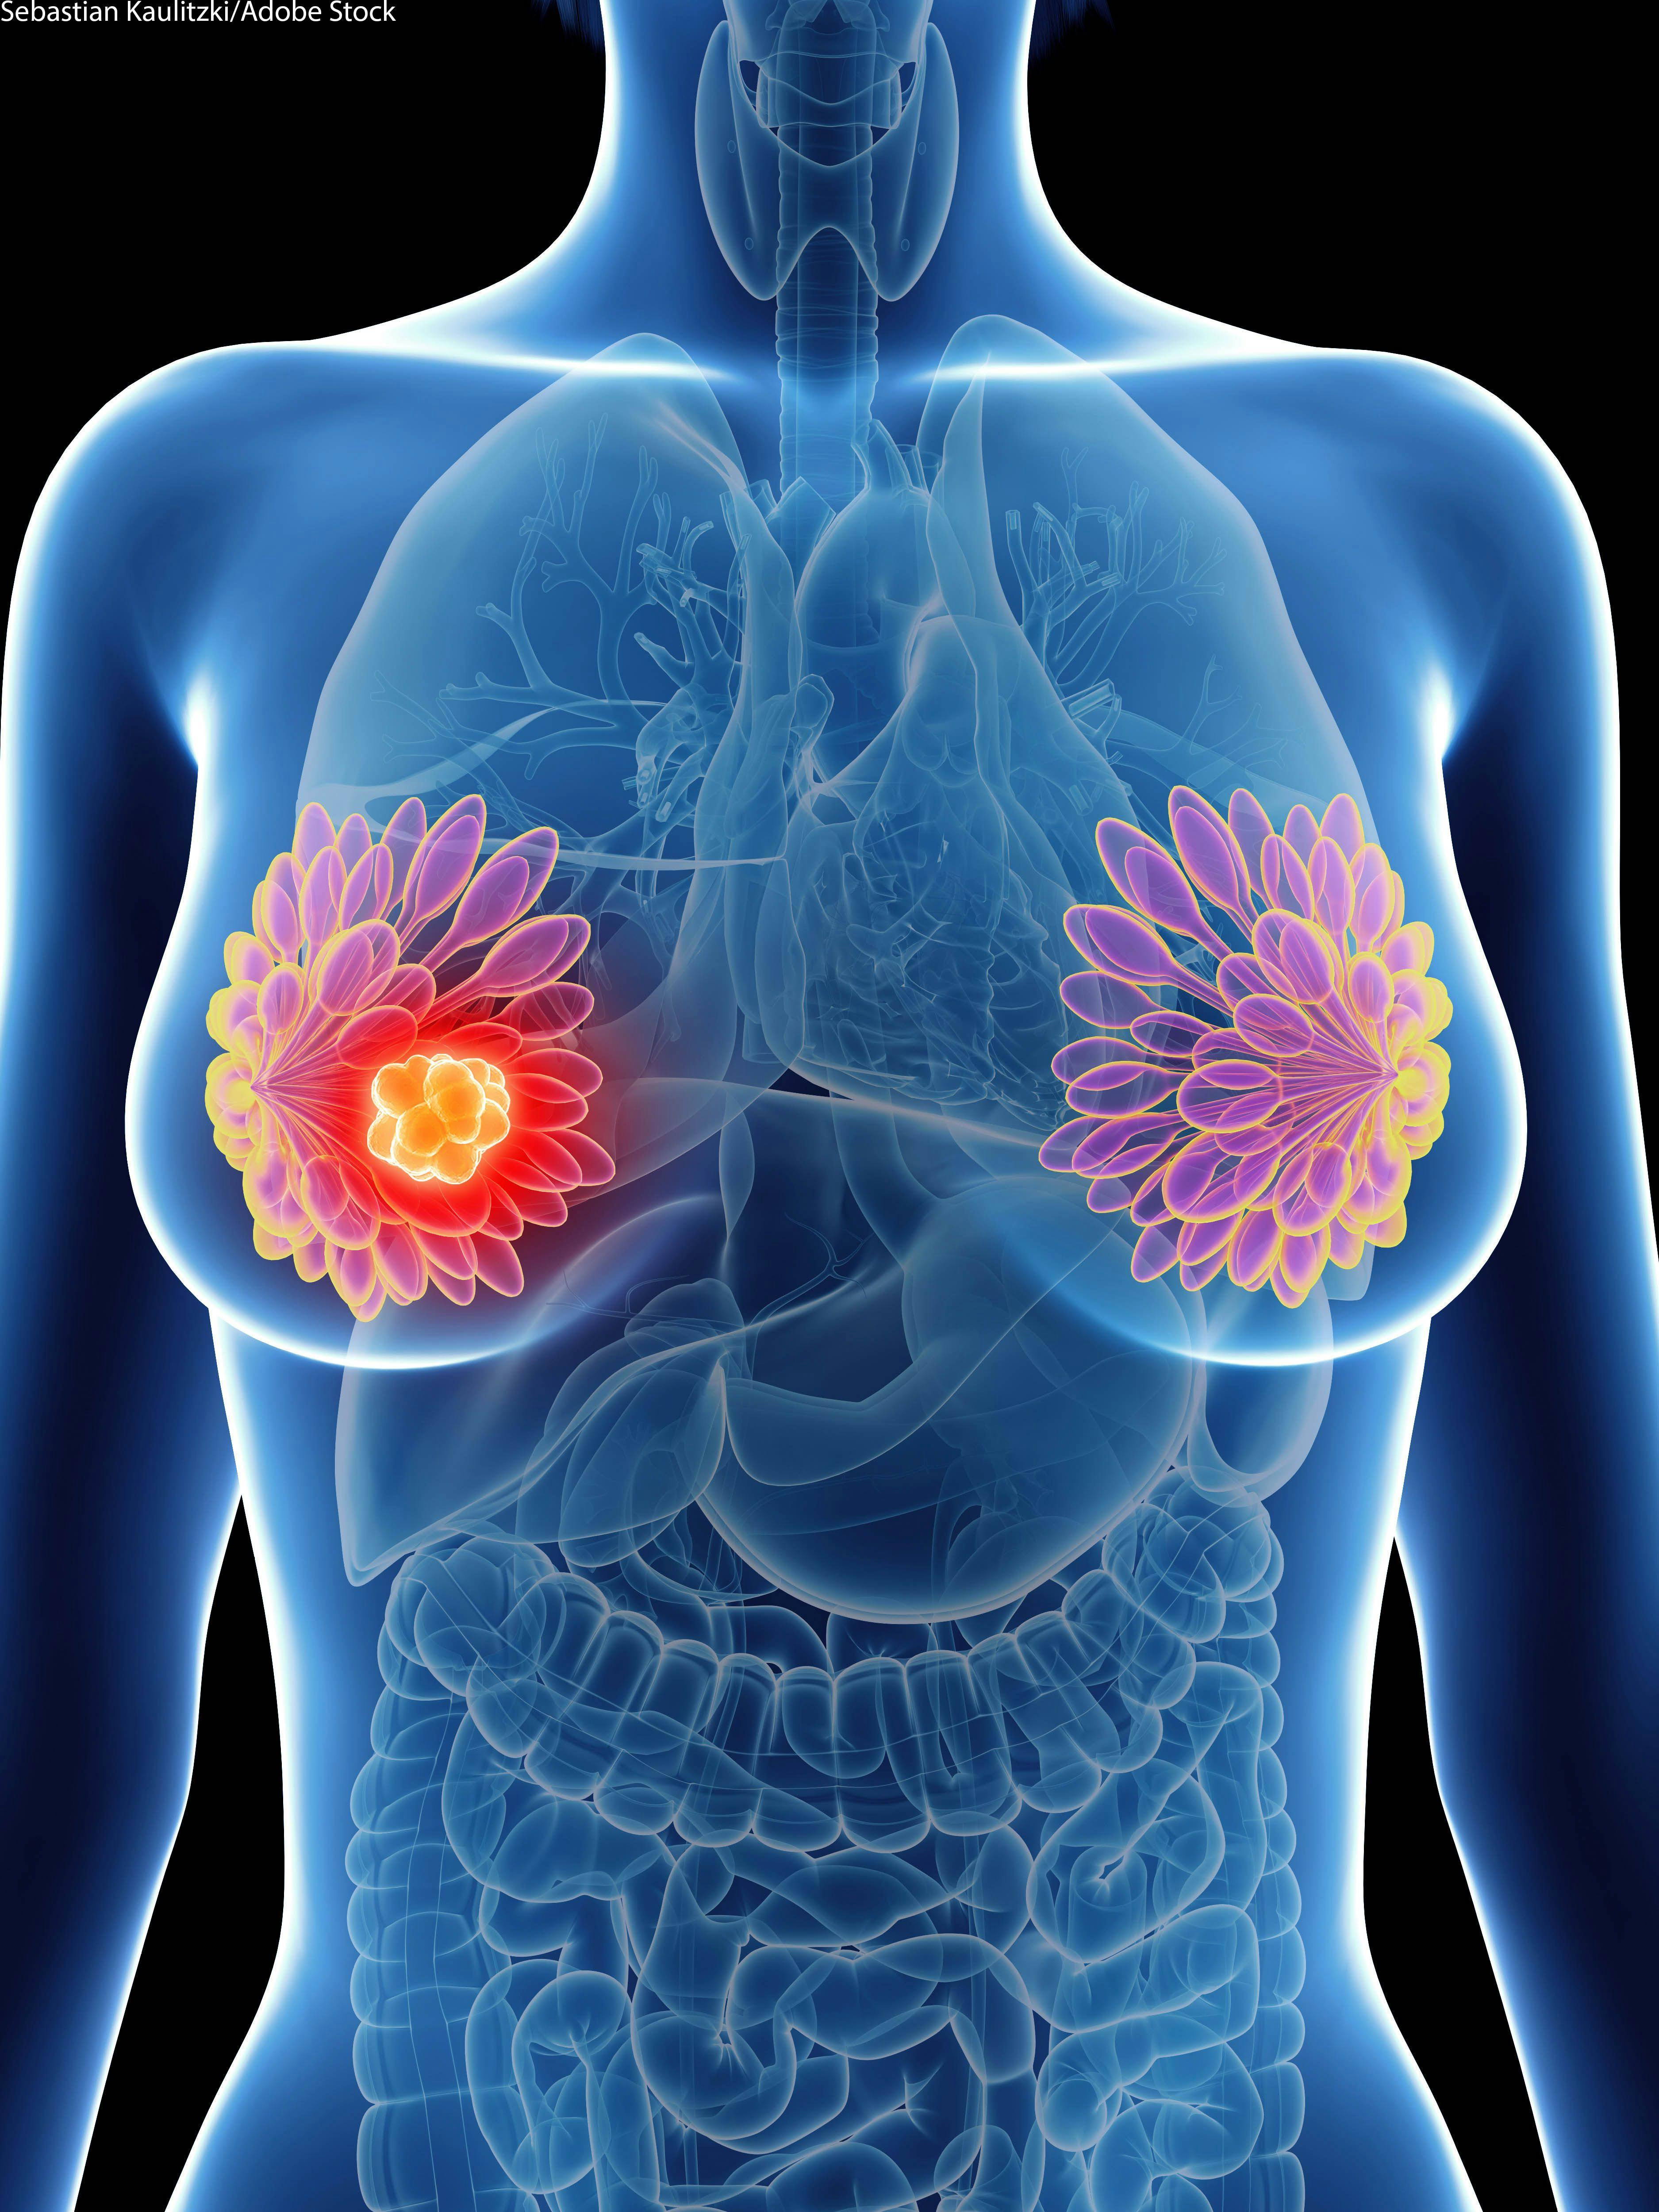 Post-BI-RADS 3 Mammogram Identifies Invasive Cancers